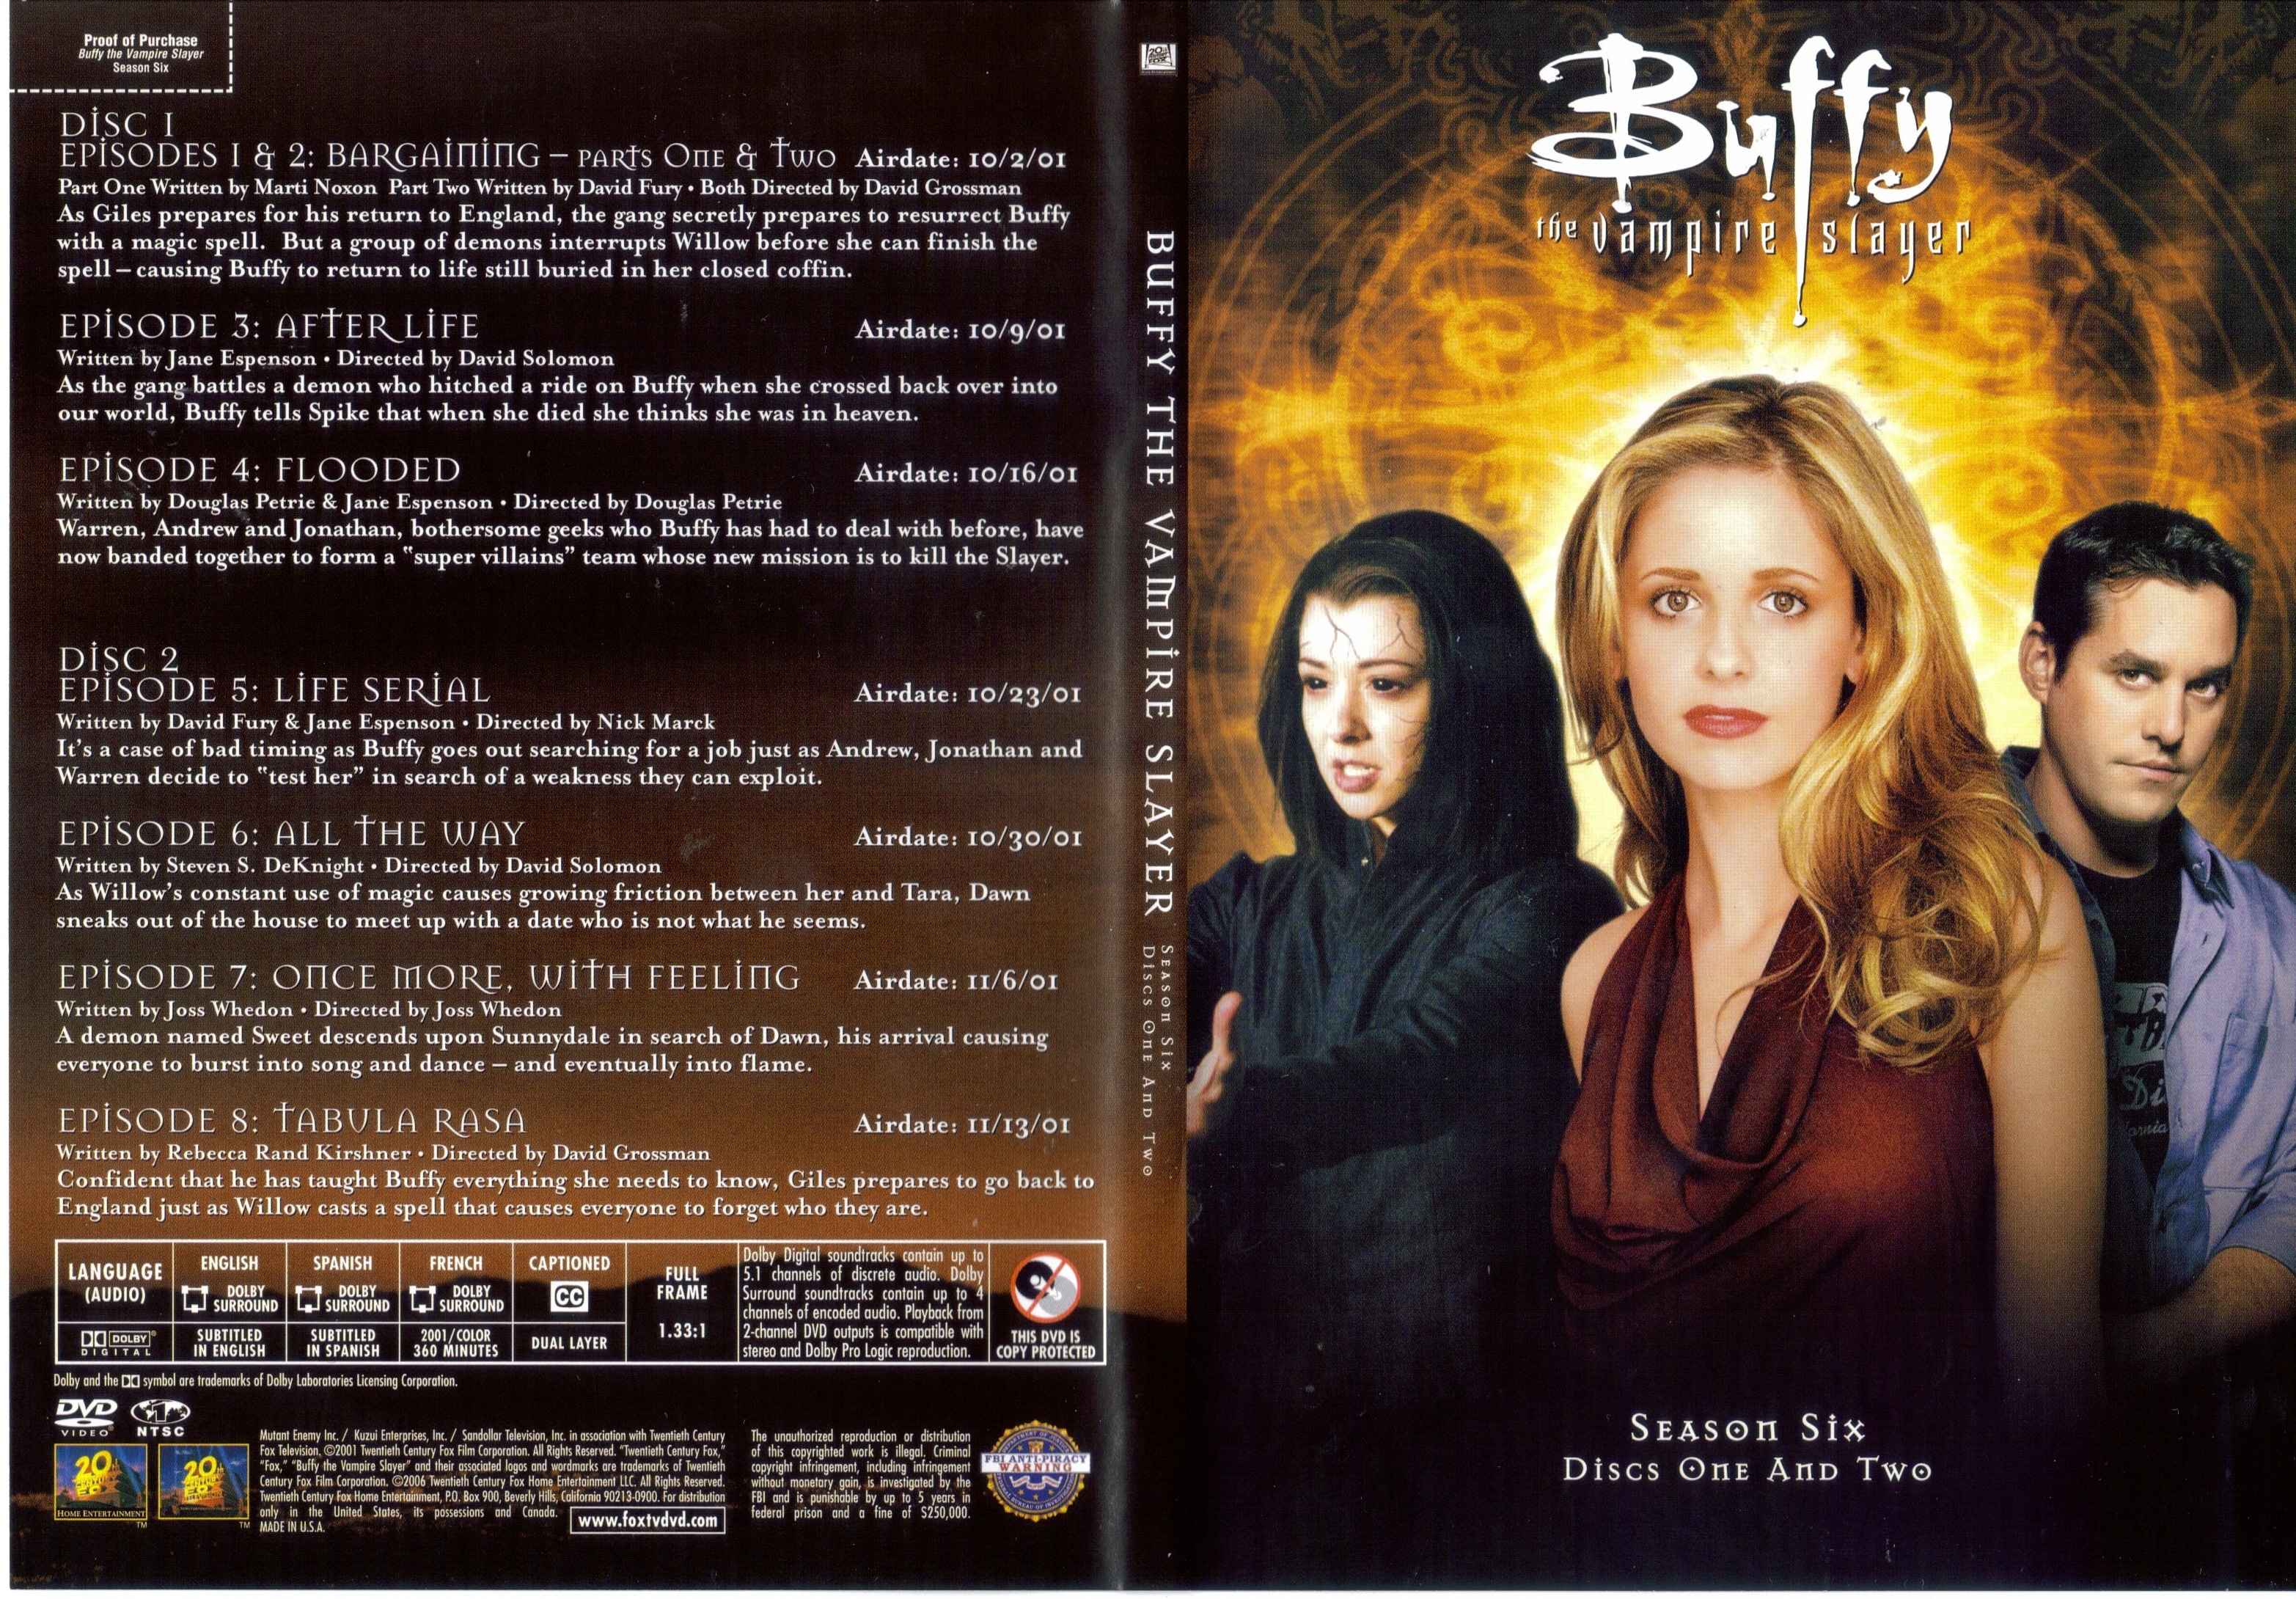 Jaquette DVD Buffy Saison 6 DVD 1 (Canadienne)